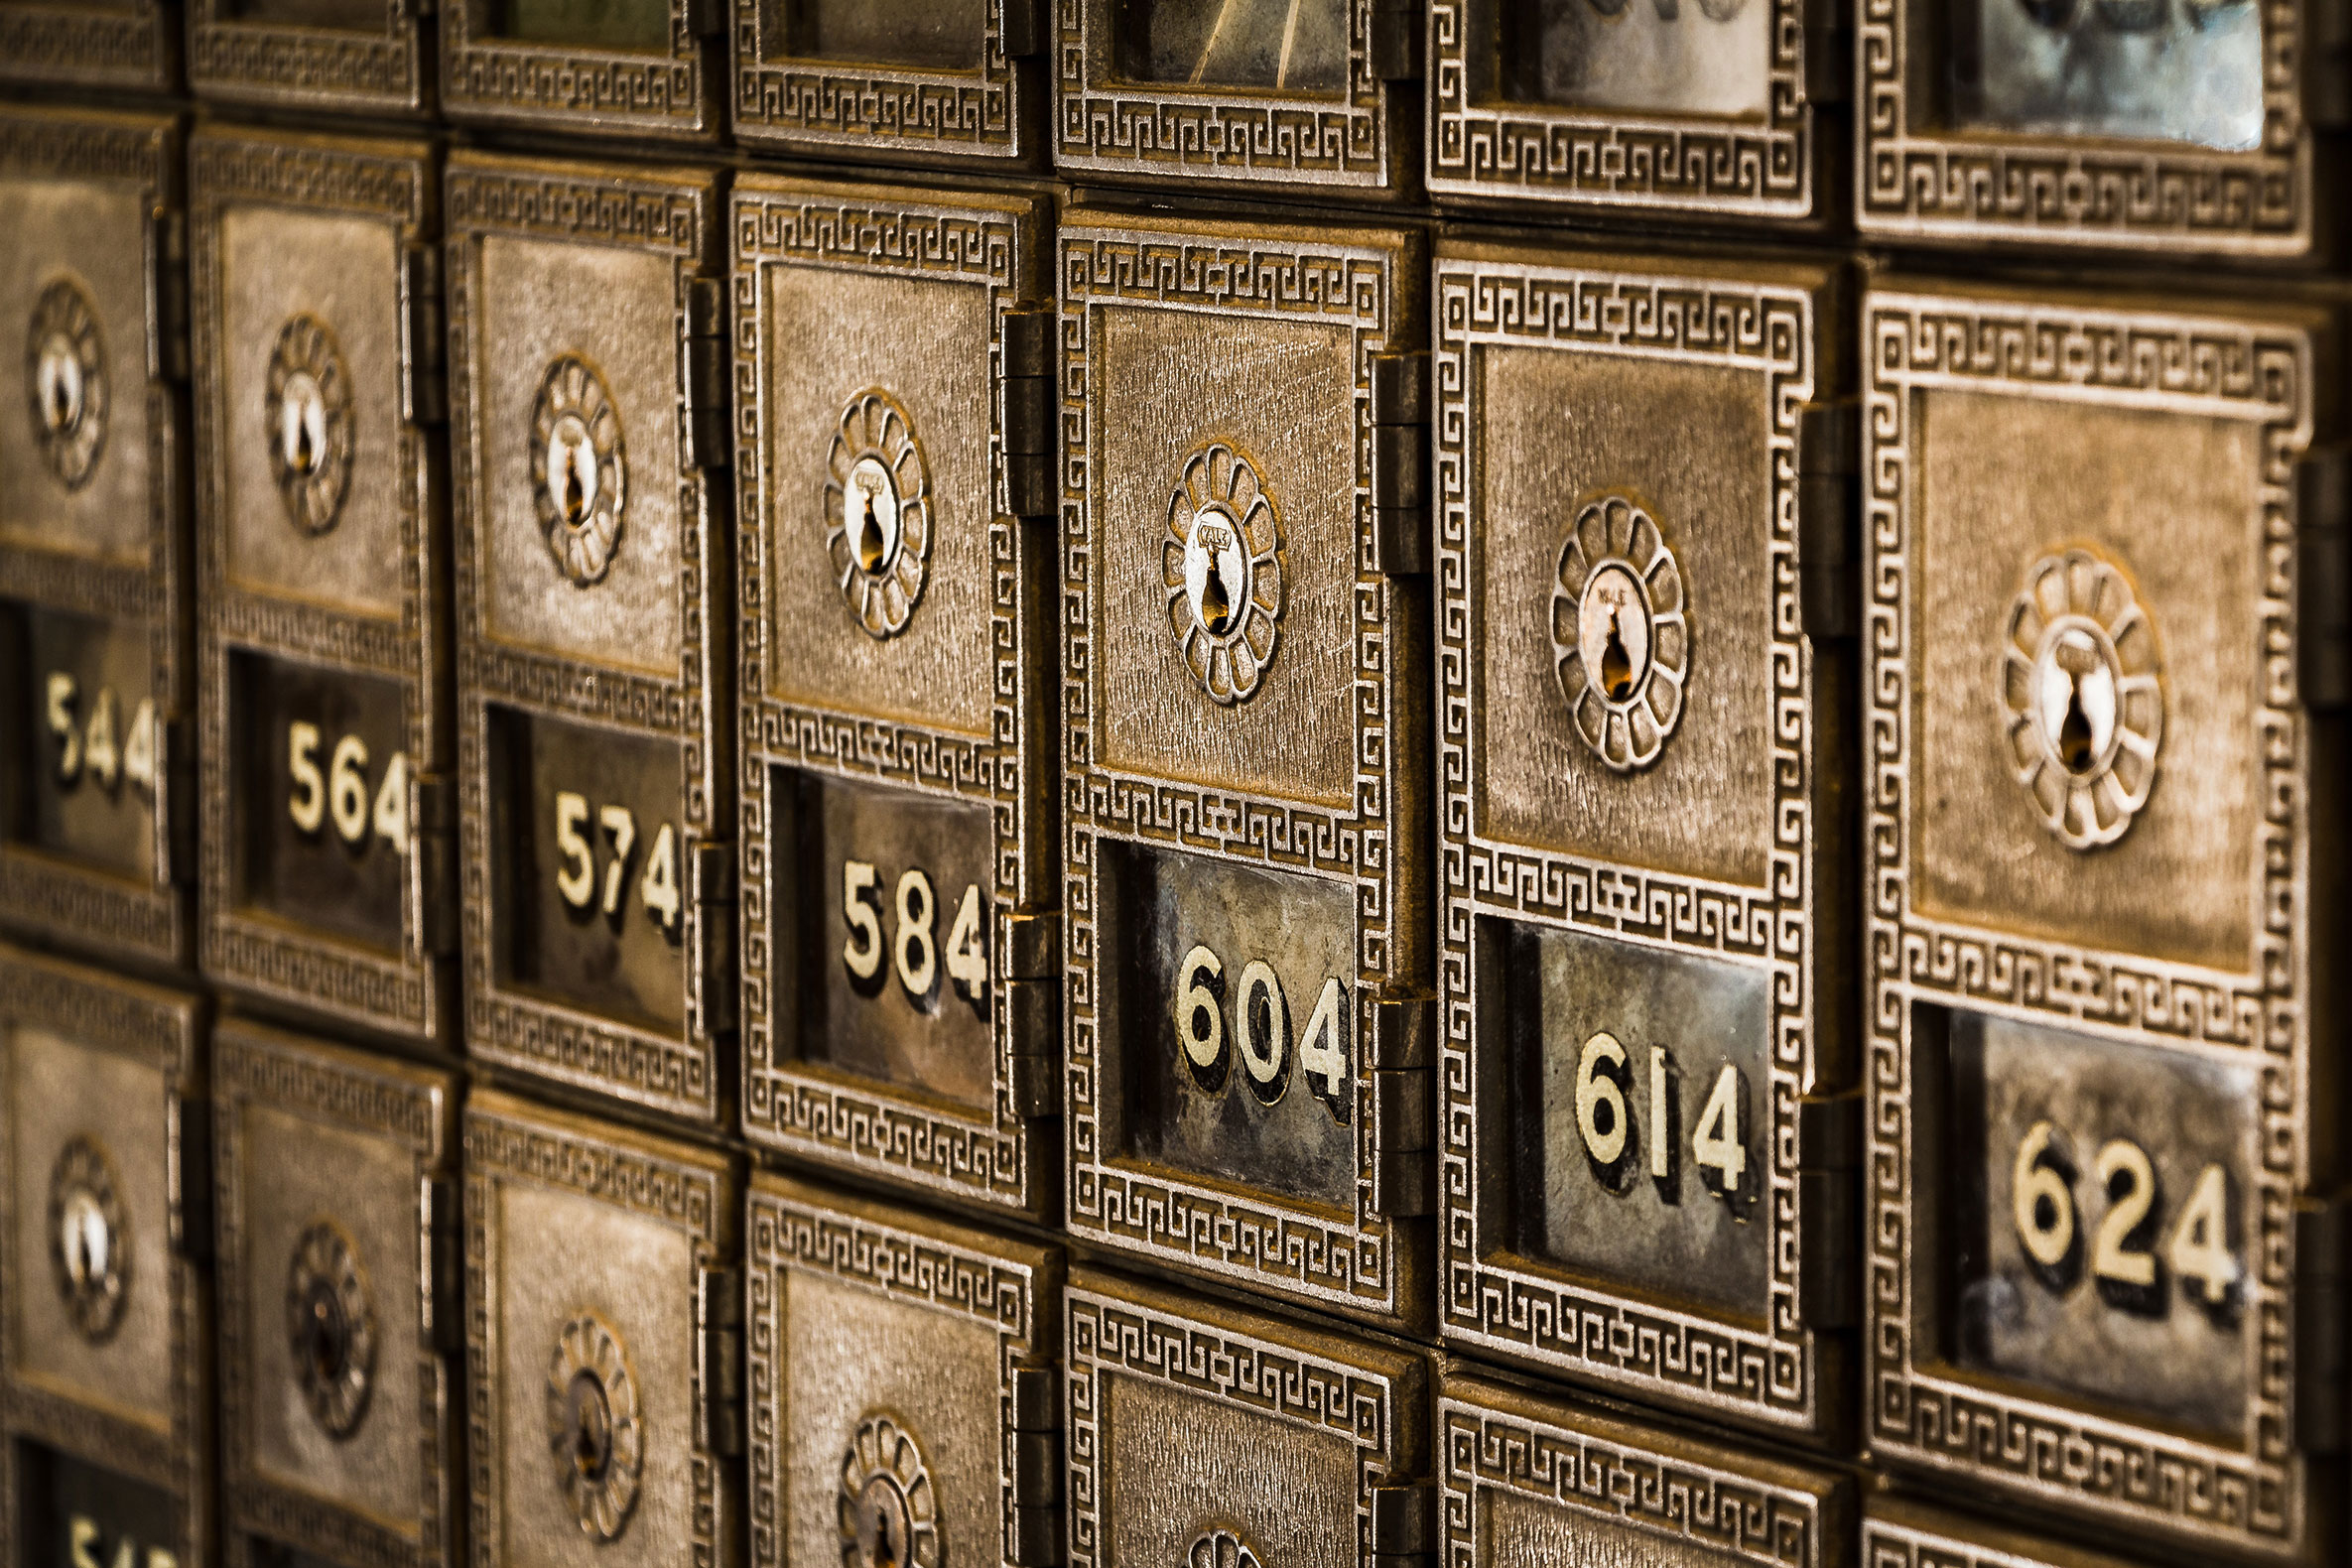 Old safety deposit boxes